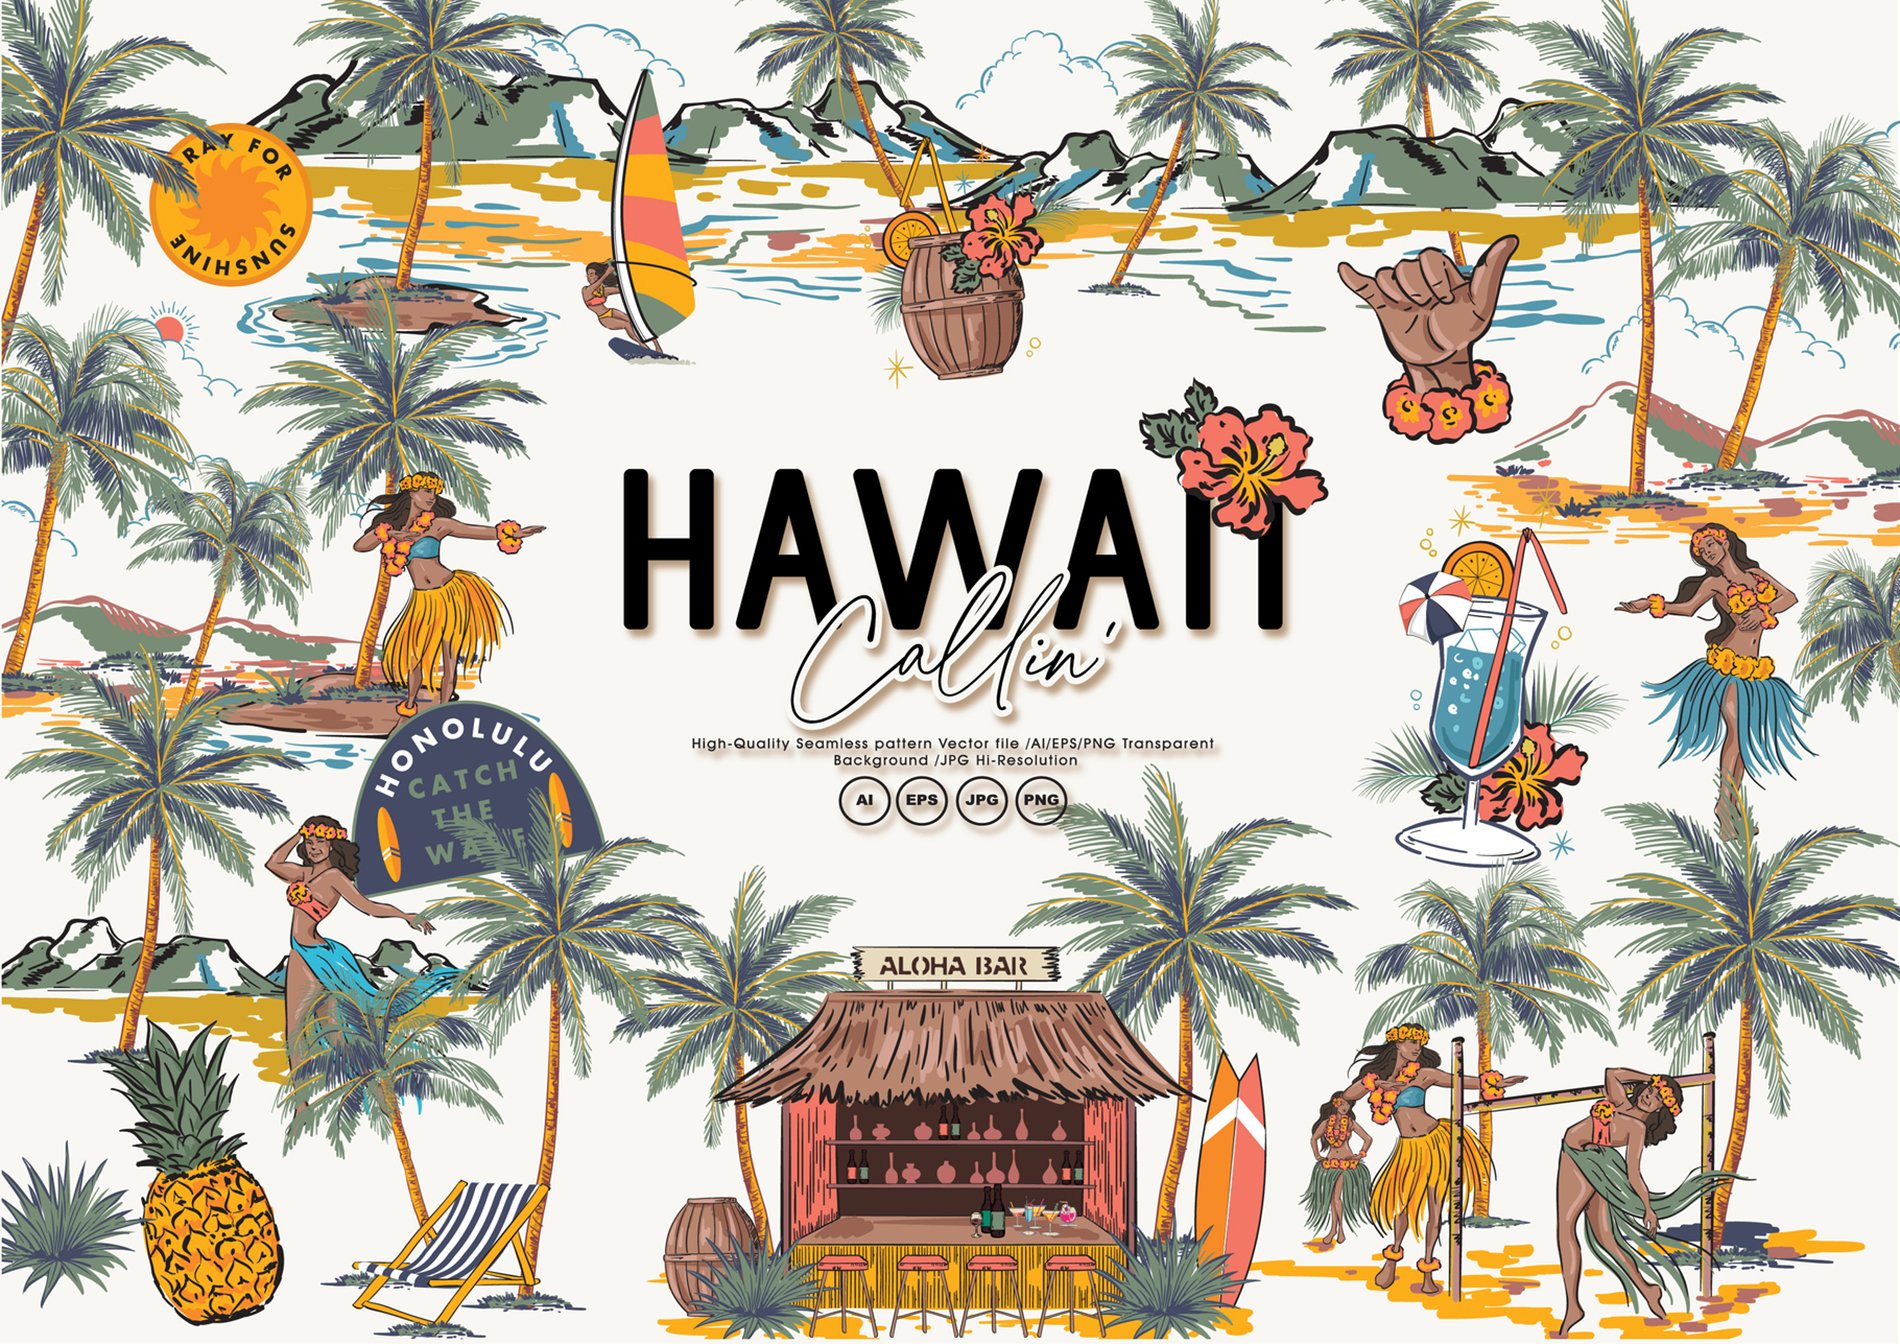 HAWAII Callin' cover image.